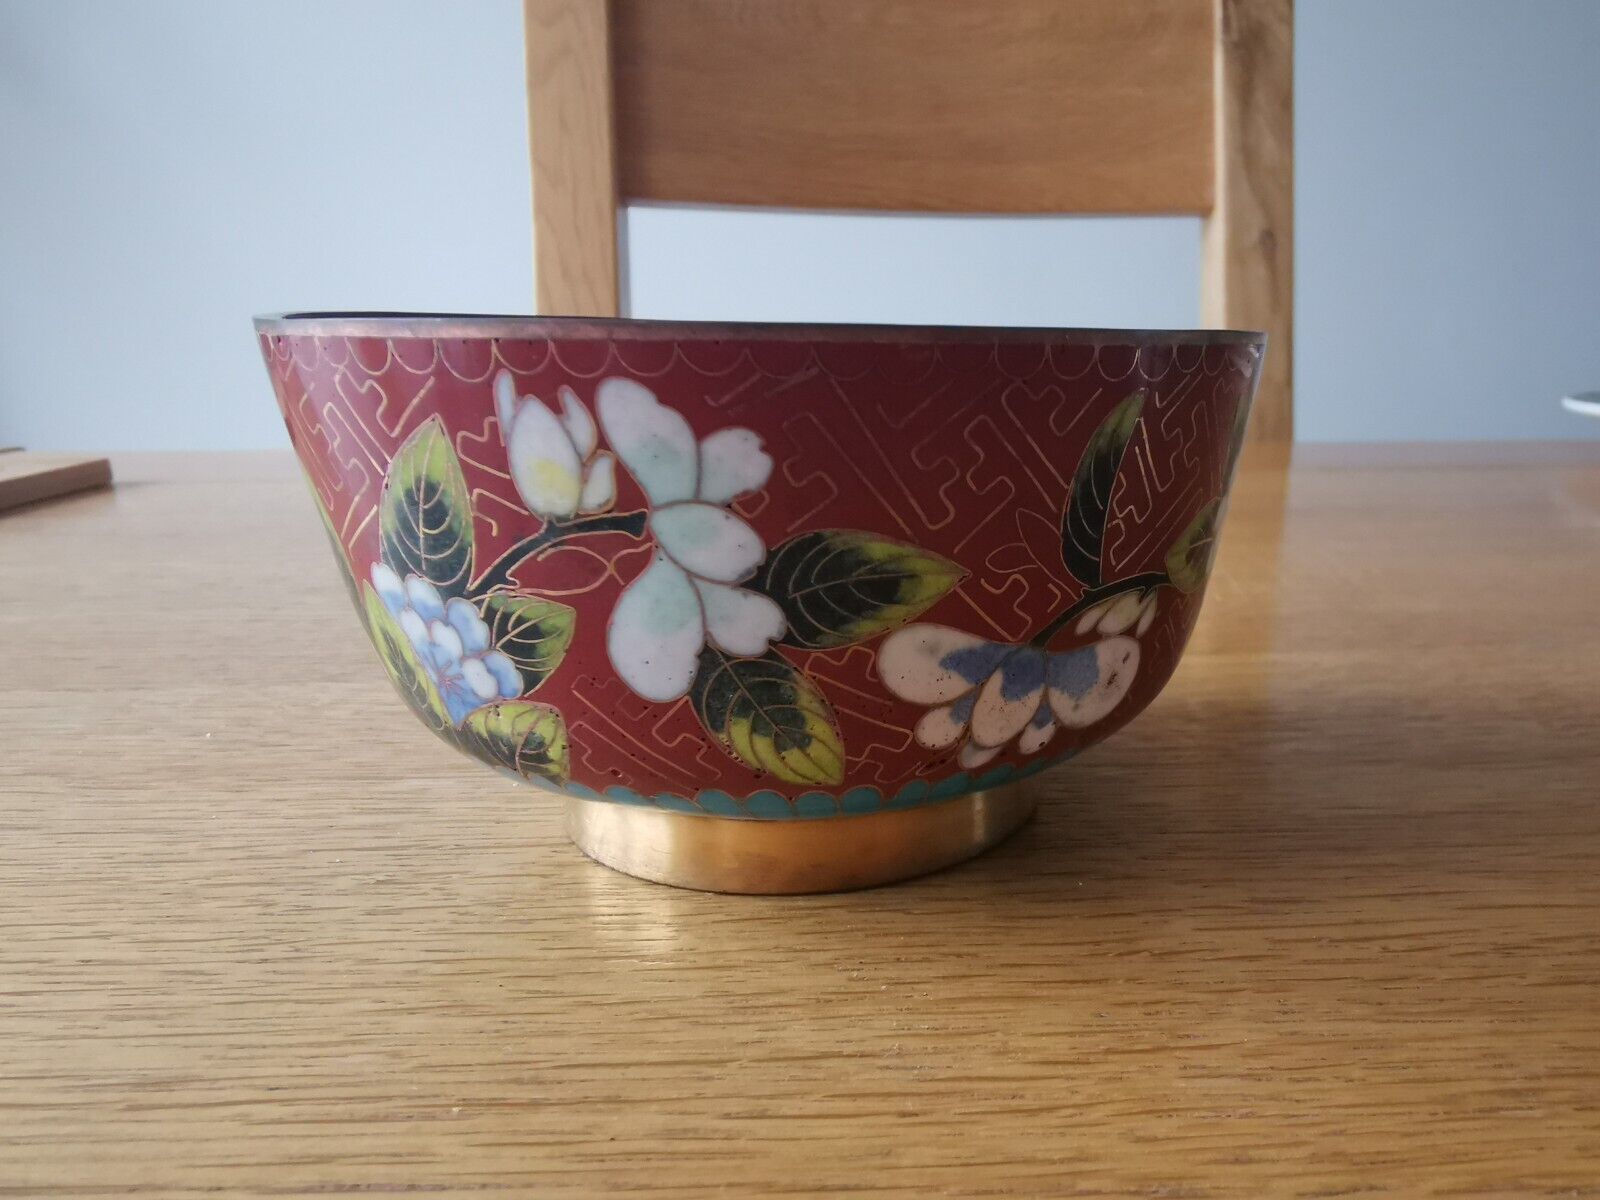 Antique Valuations: Chinese Cloisonné Vintage Art Deco Terracotta And Teal Bowl